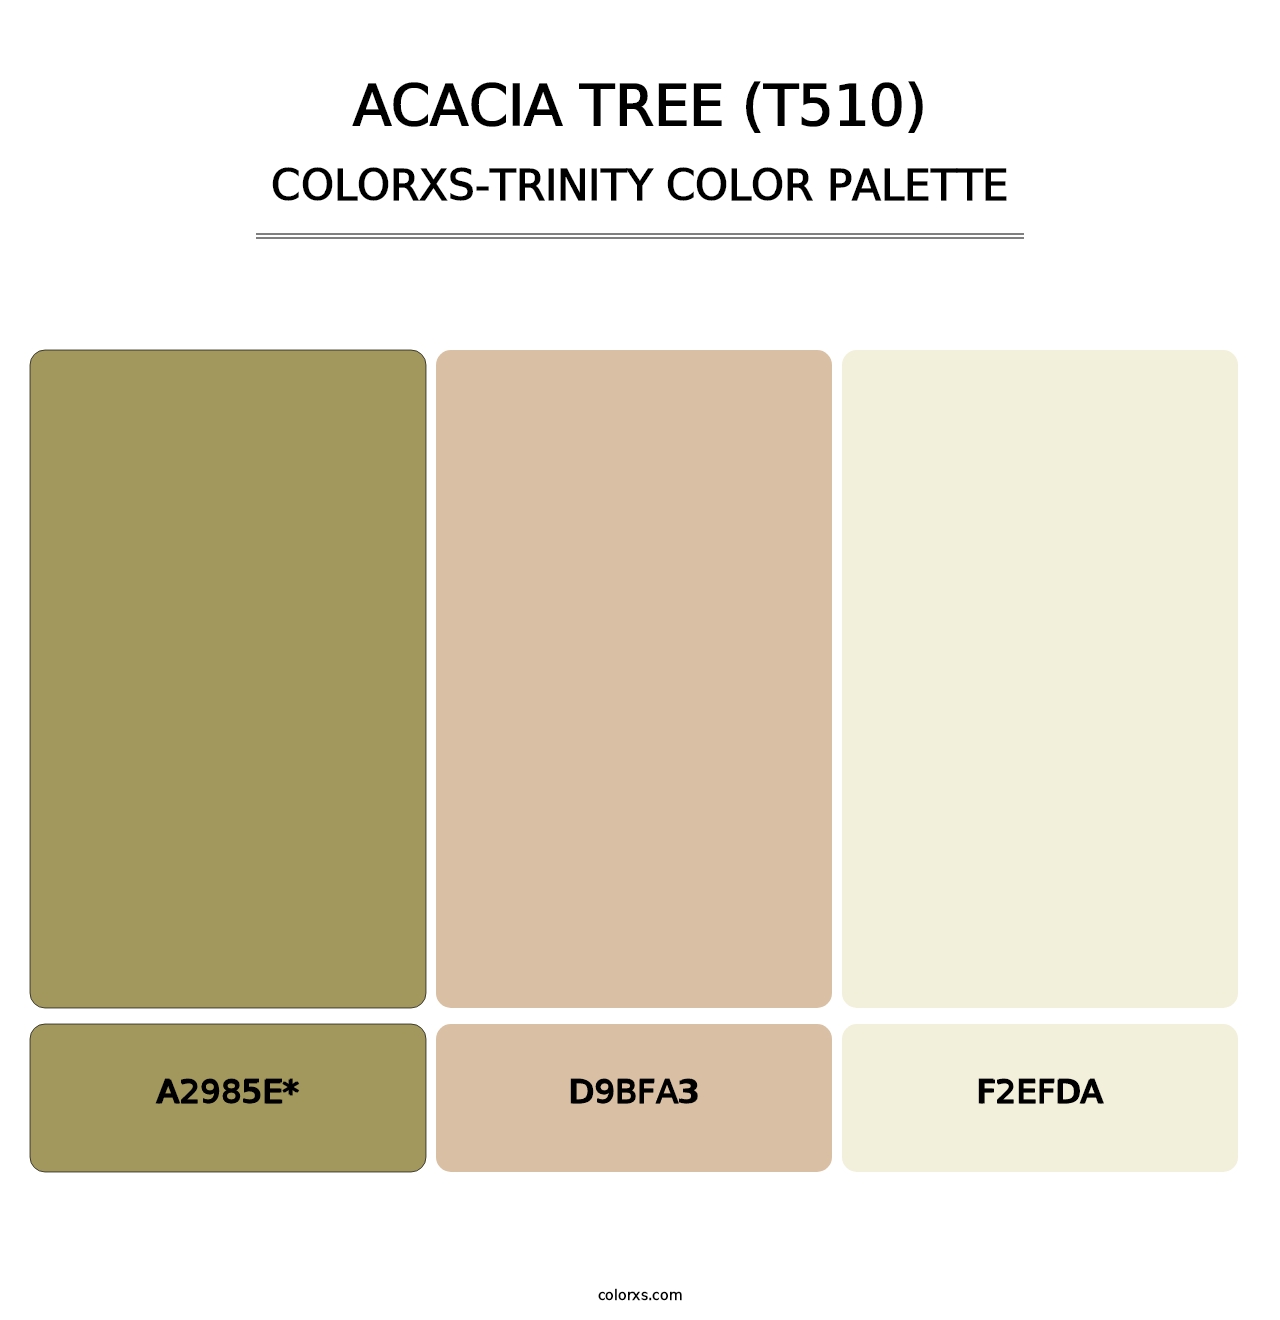 Acacia Tree (T510) - Colorxs Trinity Palette